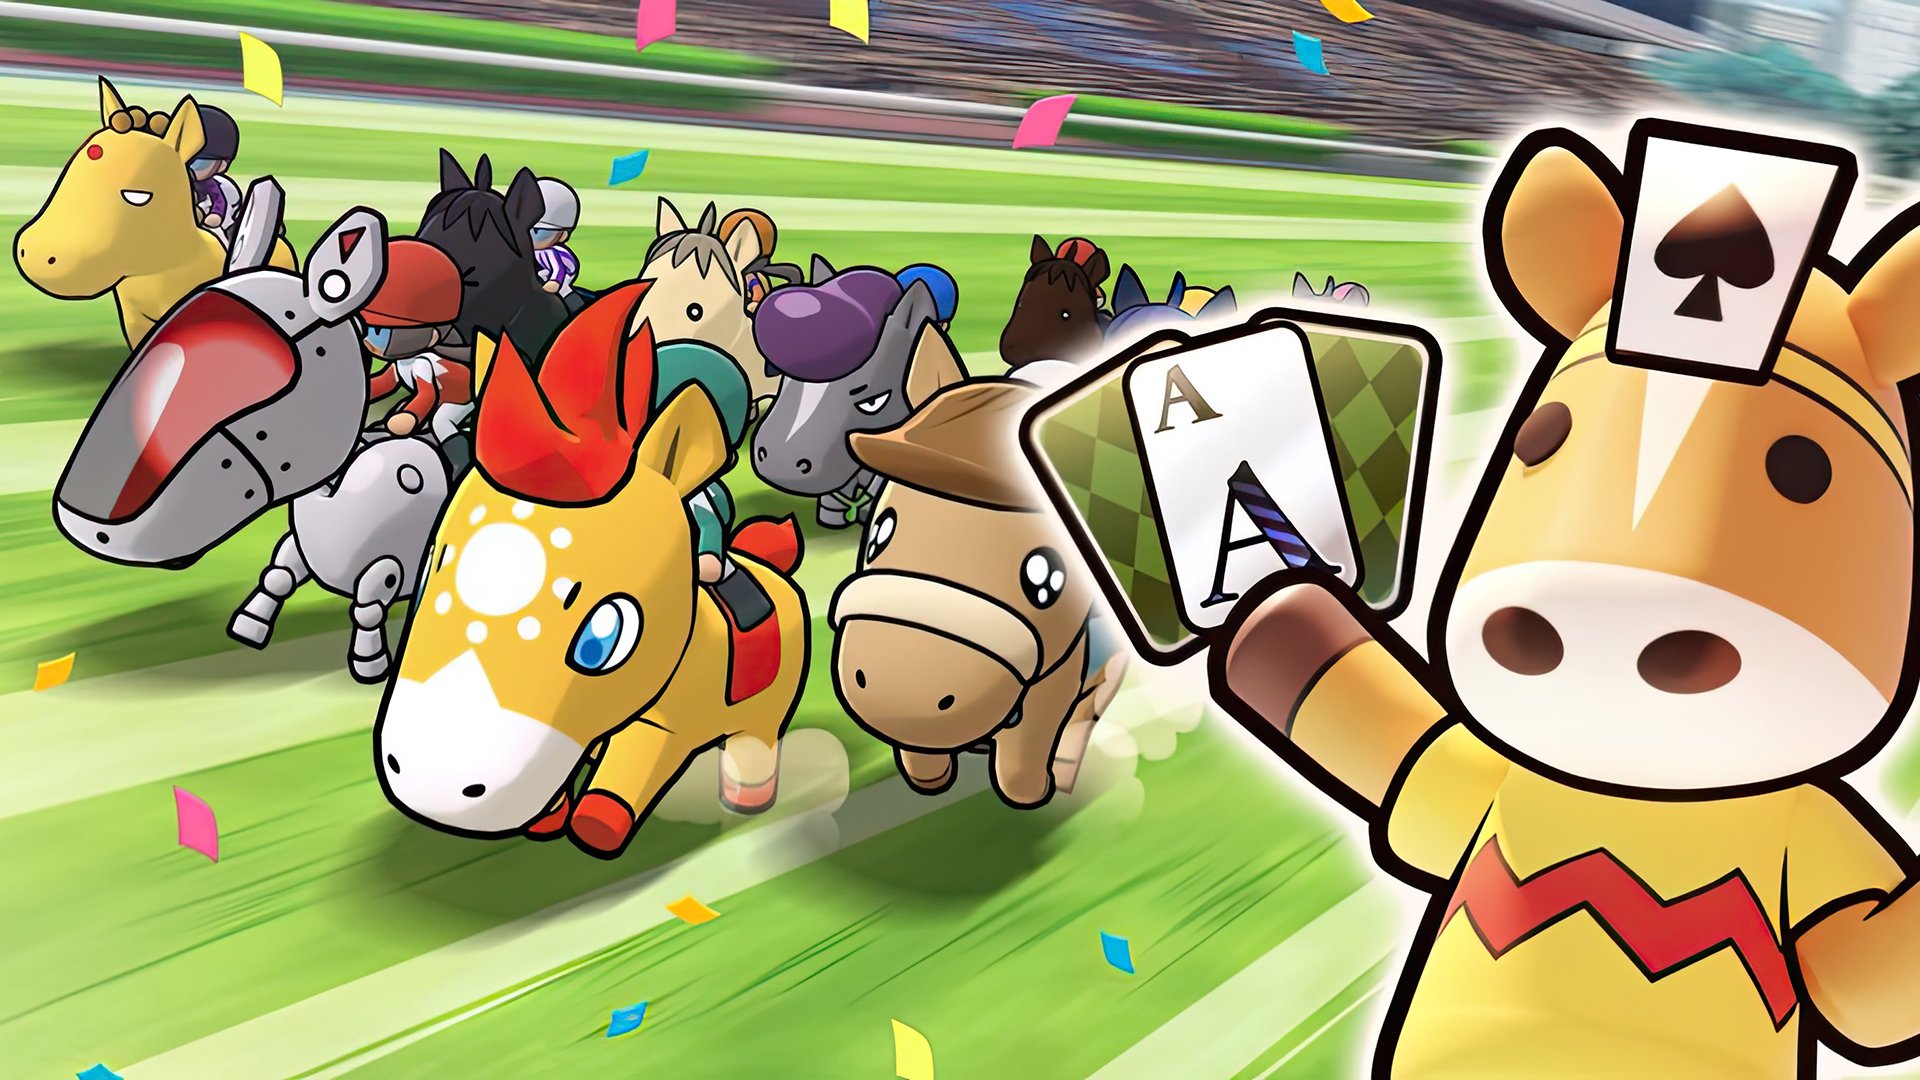 Pocket Card Jockey, from Pokémon's creators, comes to Apple Arcade